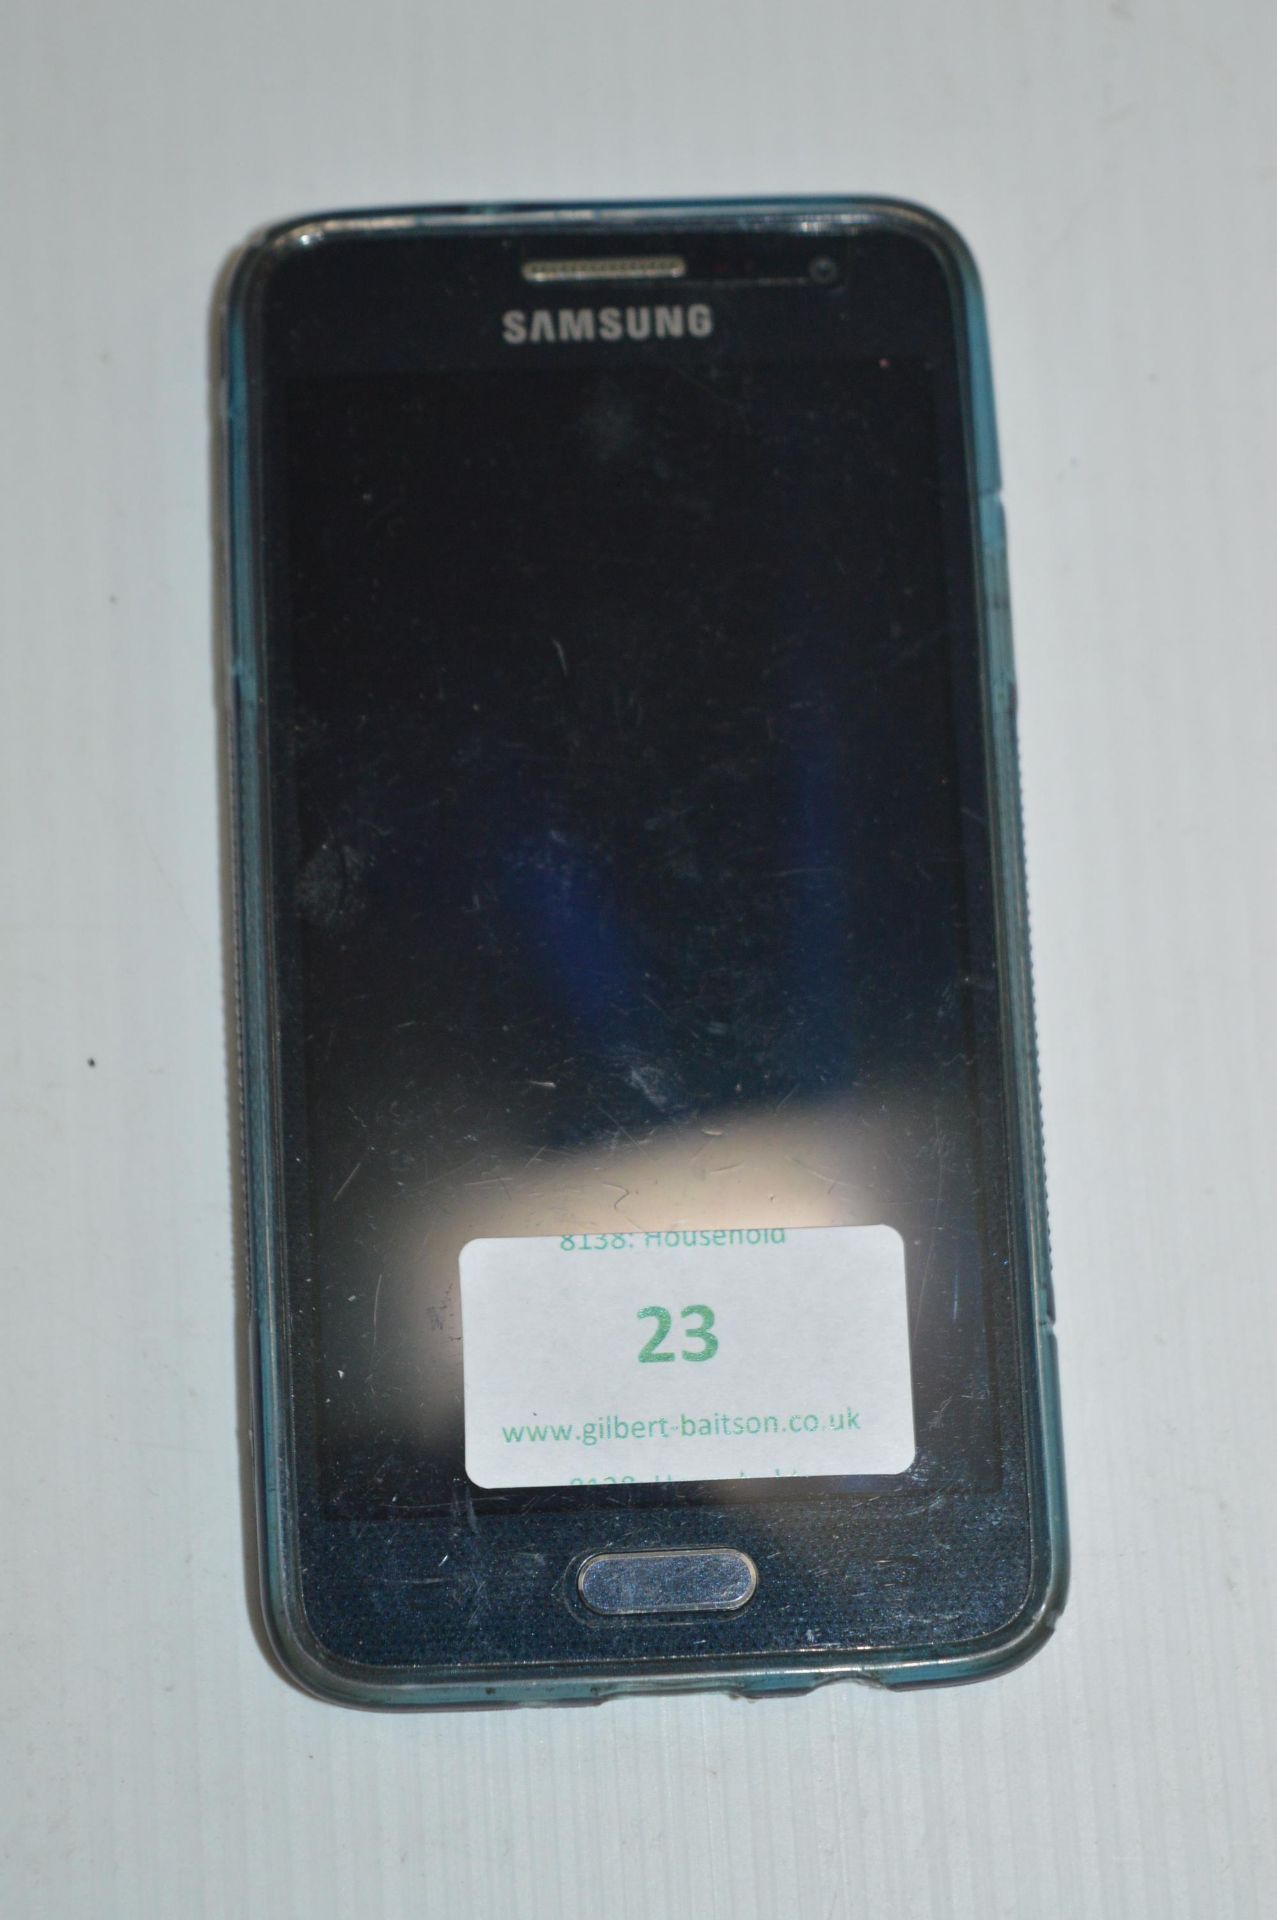 *Samsung Galaxy Mobile Phone